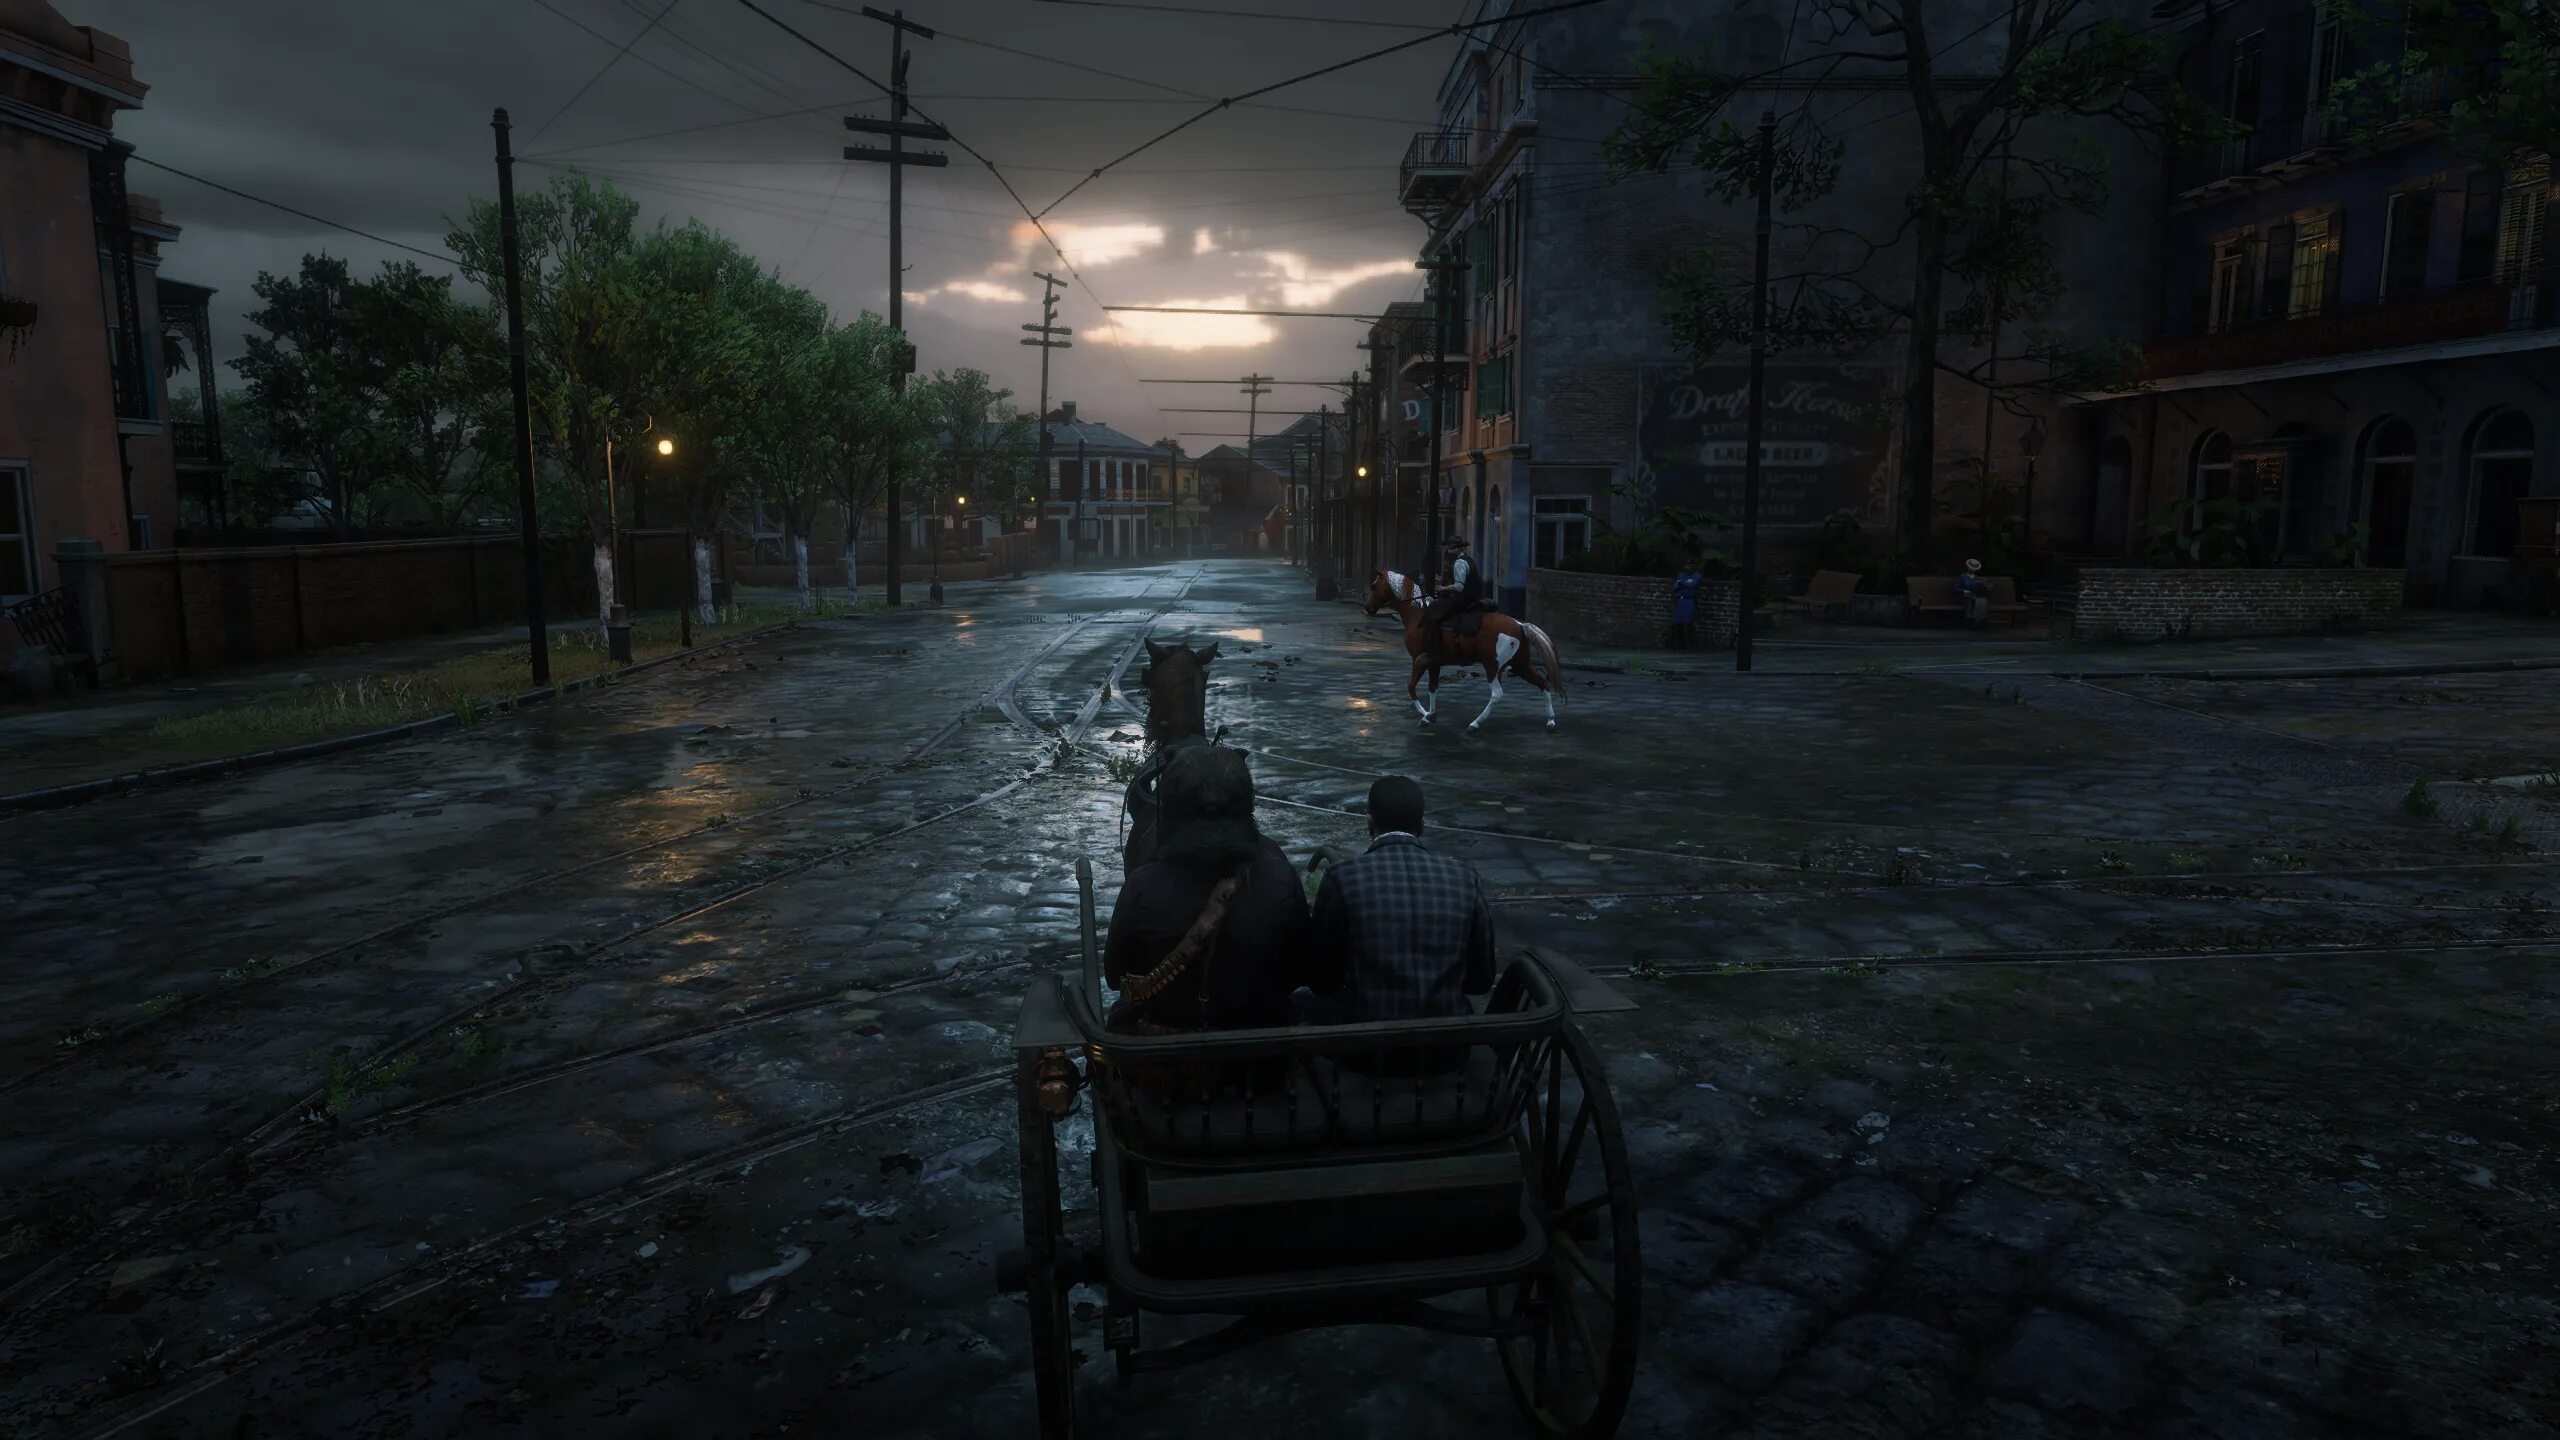 Вечер от 6.03 24. Red Dead Redemption 2 обои на рабочий стол 2560*1440. Игра Red Dead Redemption 2 PC Cover. Атмосфера улицы. Обои RTX.